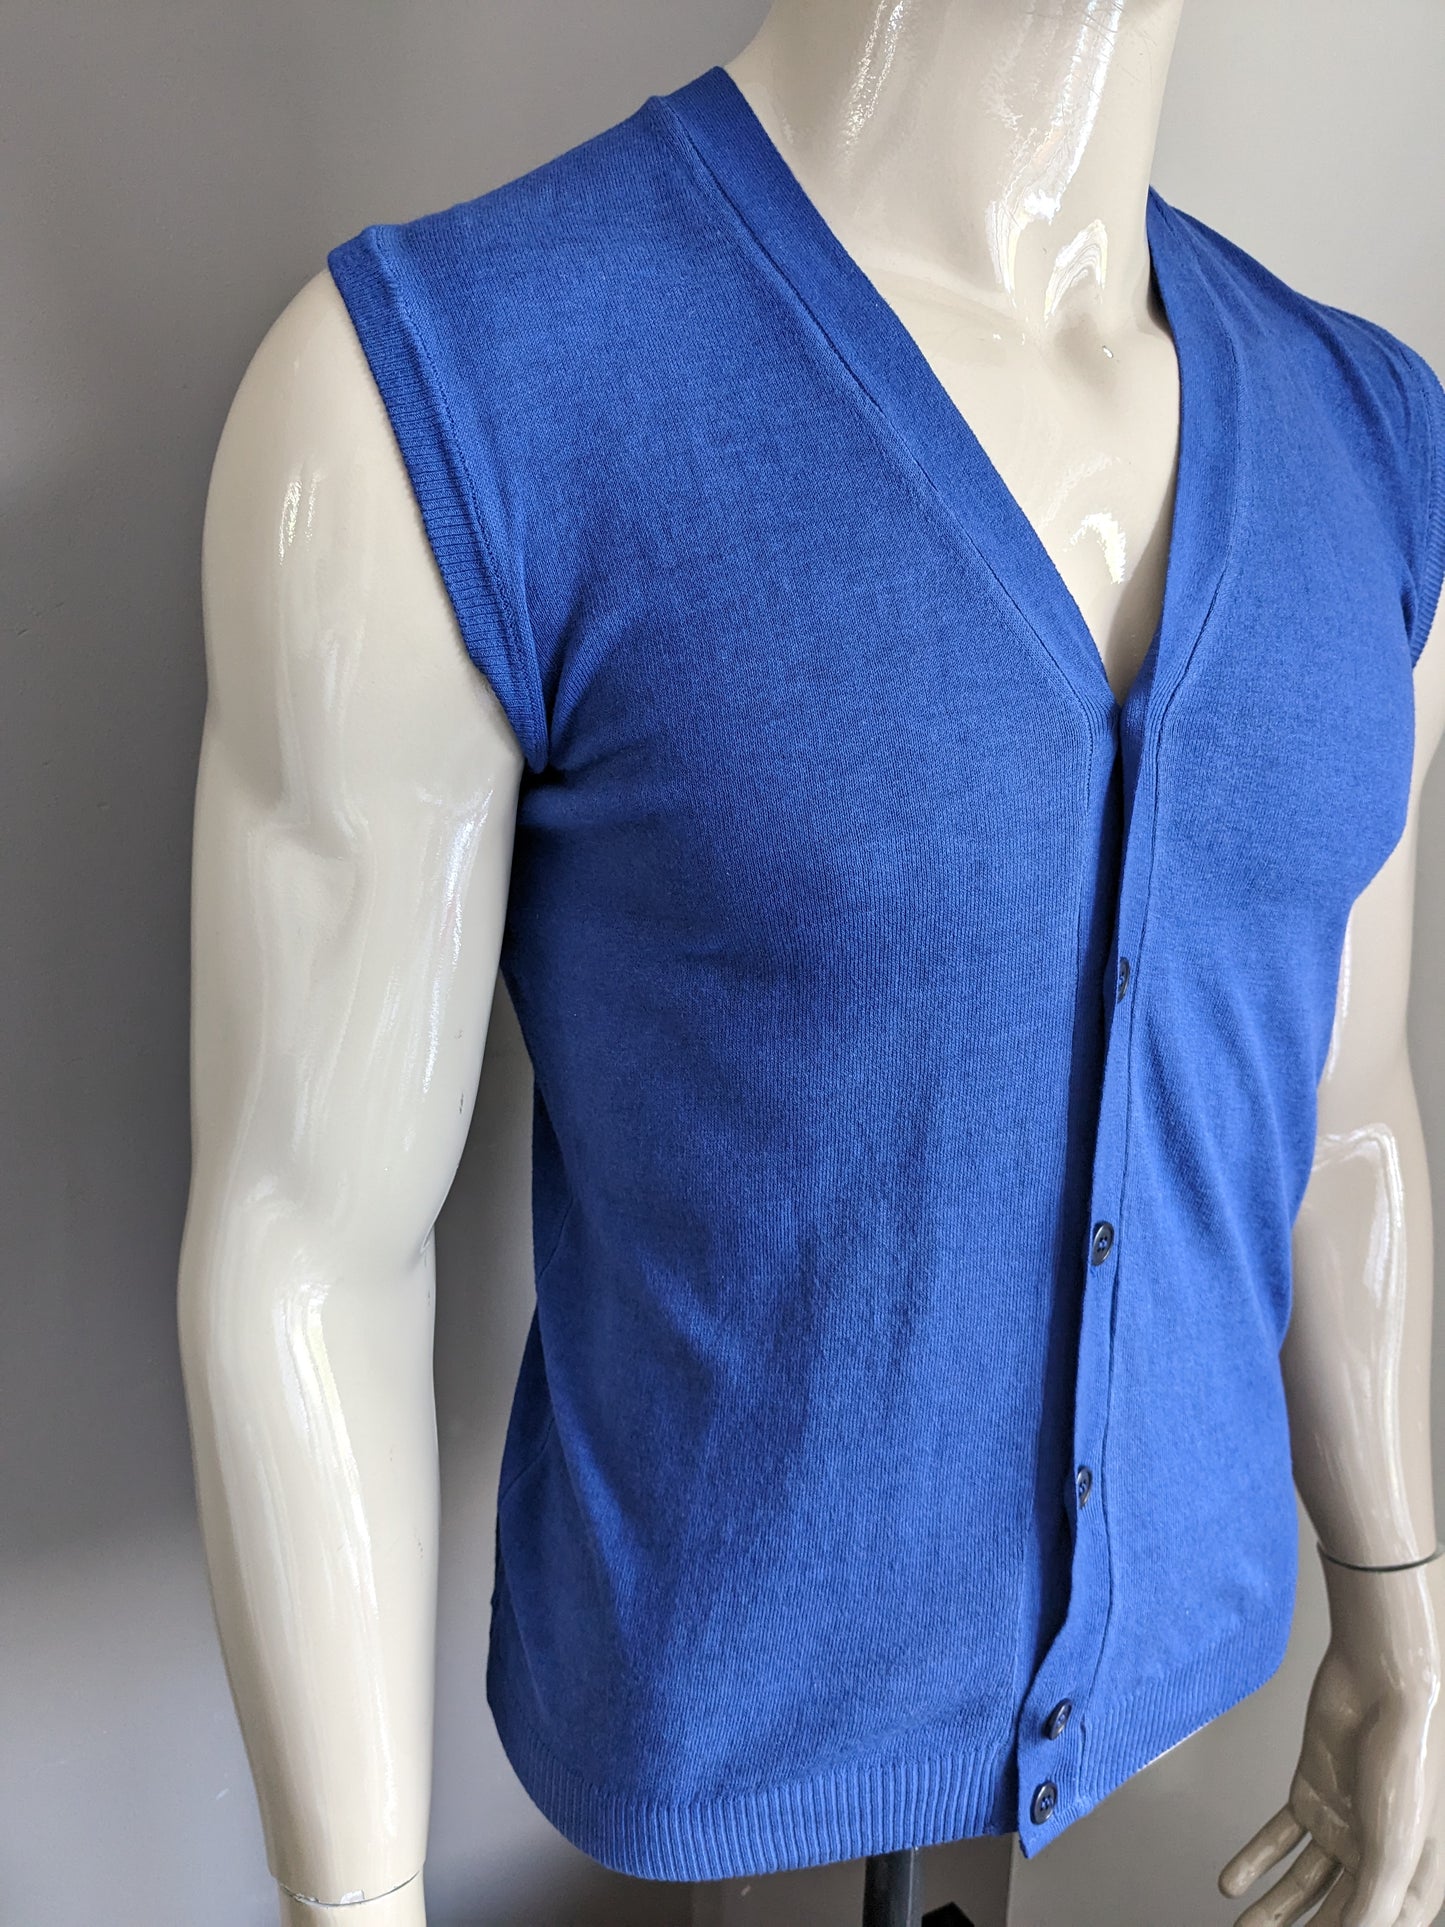 Wool & Co Cotton Wistcoat. Color azul. Tamaño S.